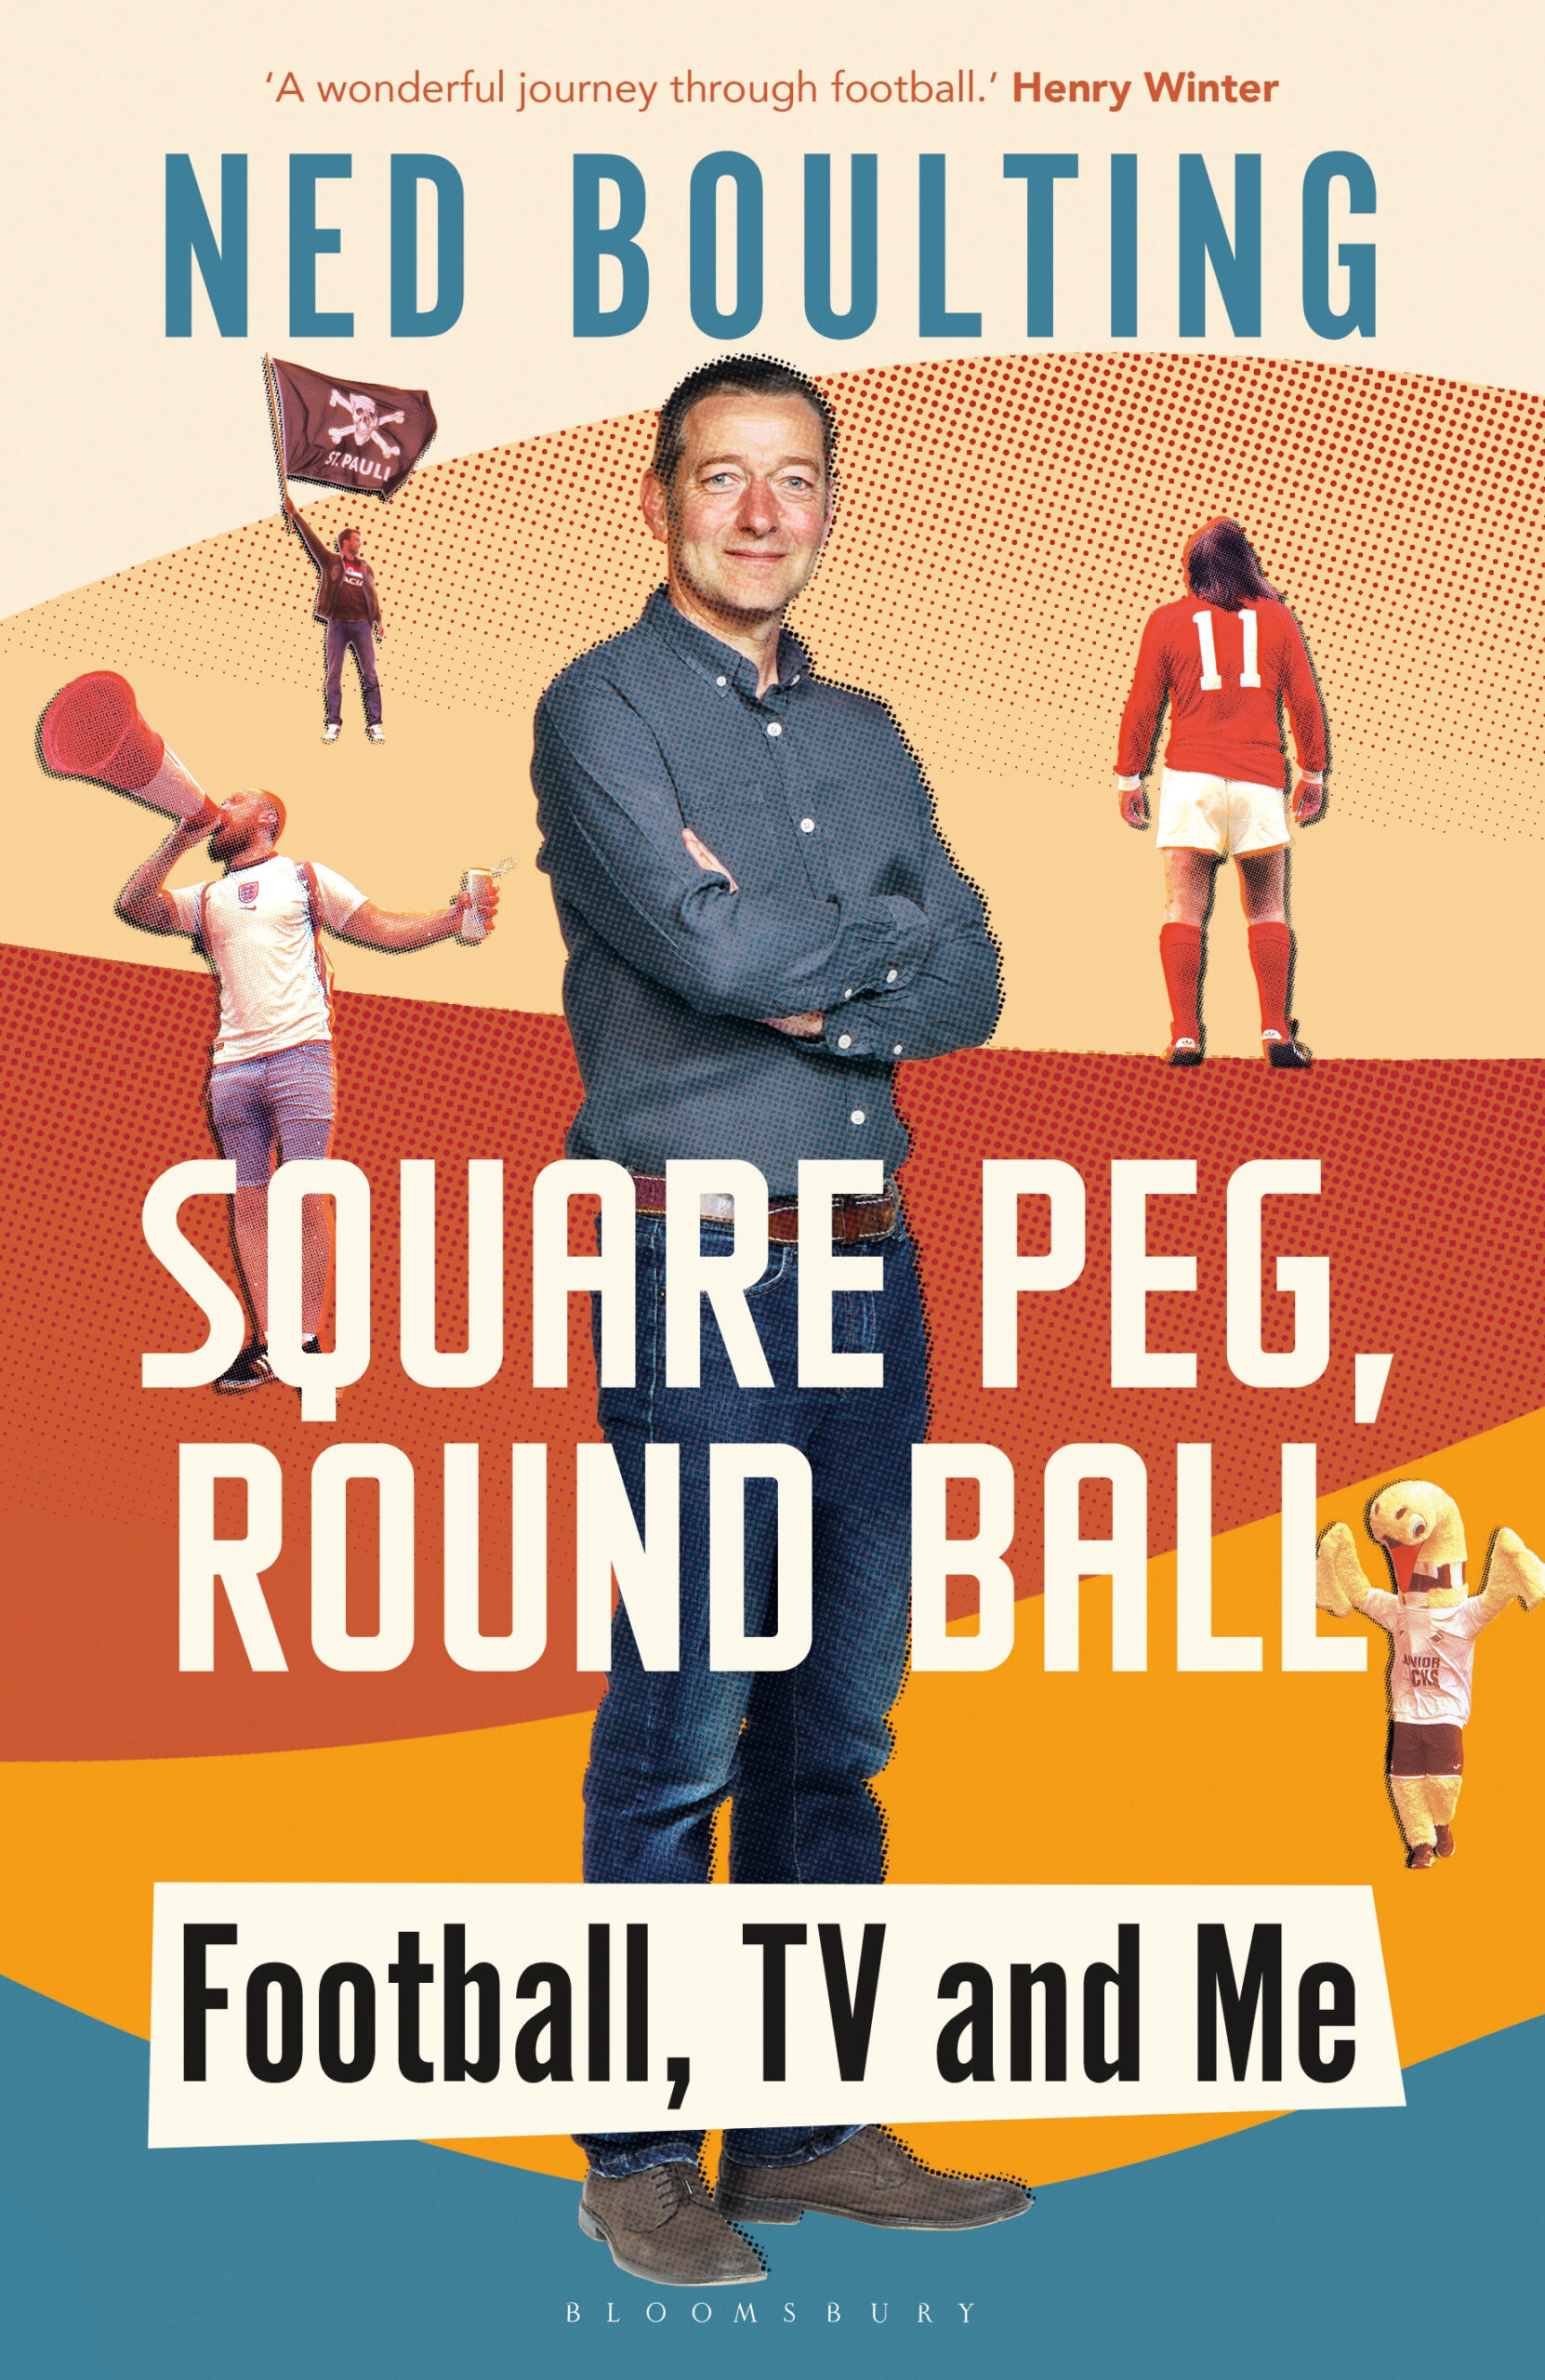 Square Peg, Round Ball